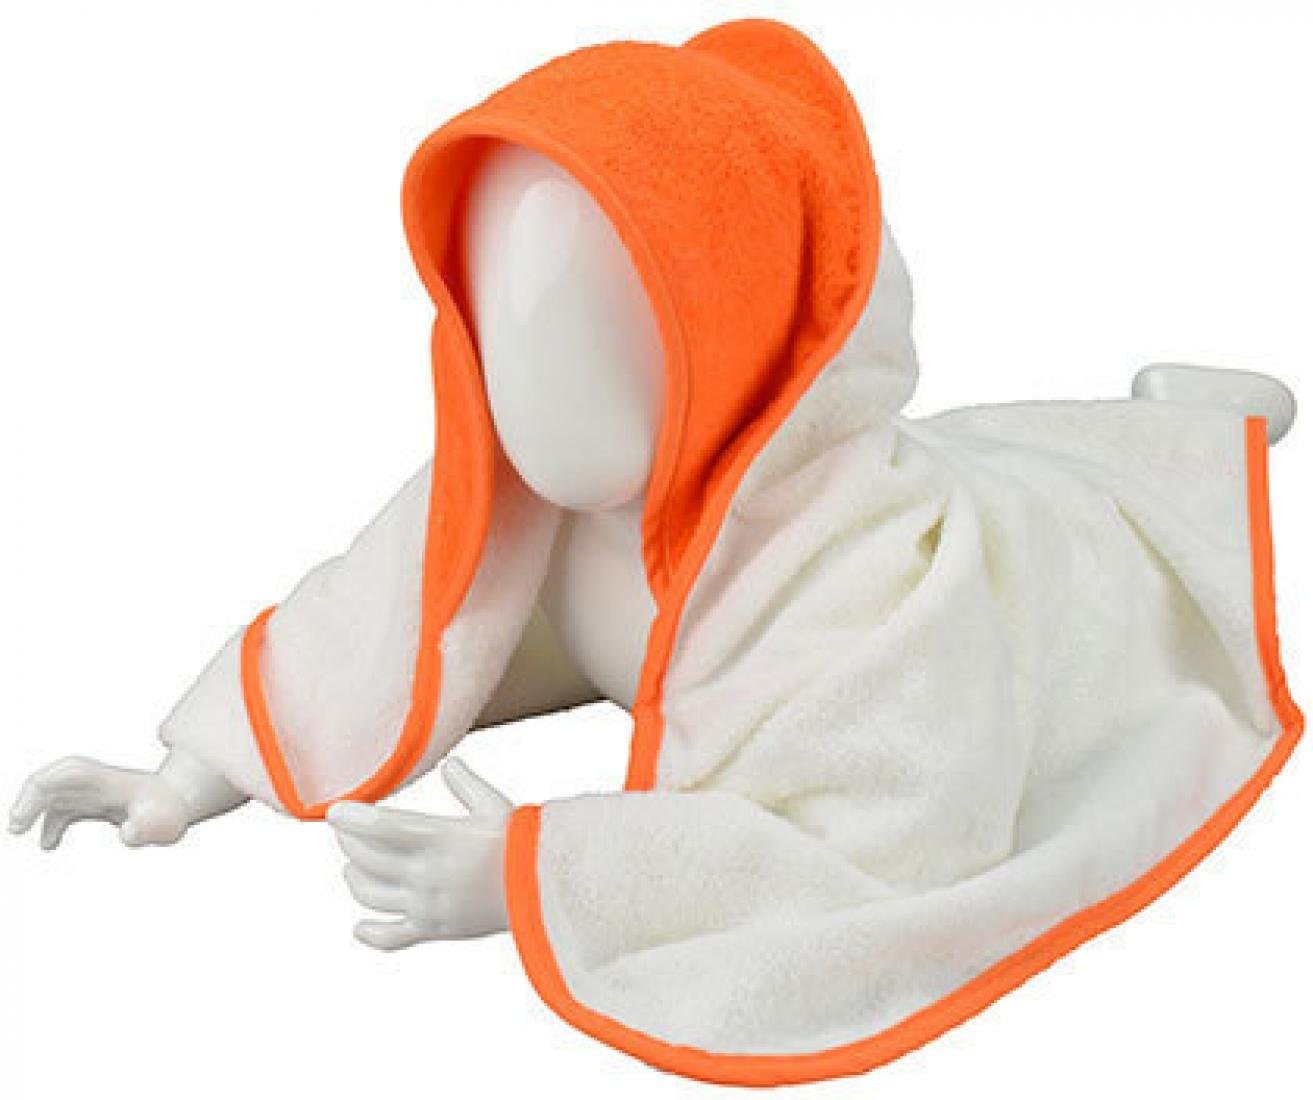 A&R Handtuch Baby Hooded Towel / 75 x 75 cm von A&R